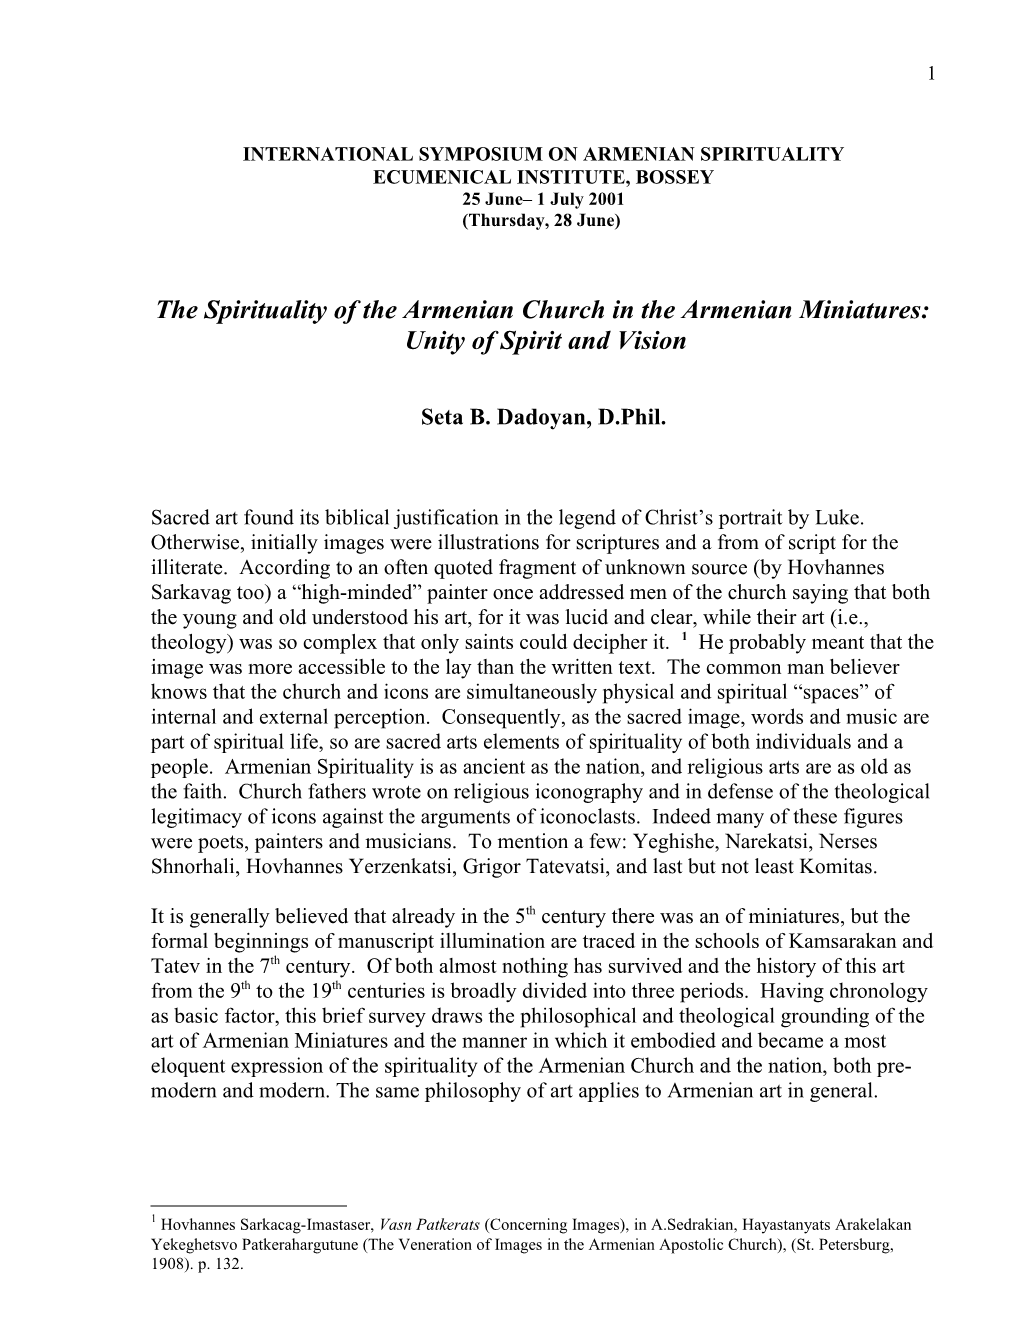 International Symposium on Armenian Spirituality